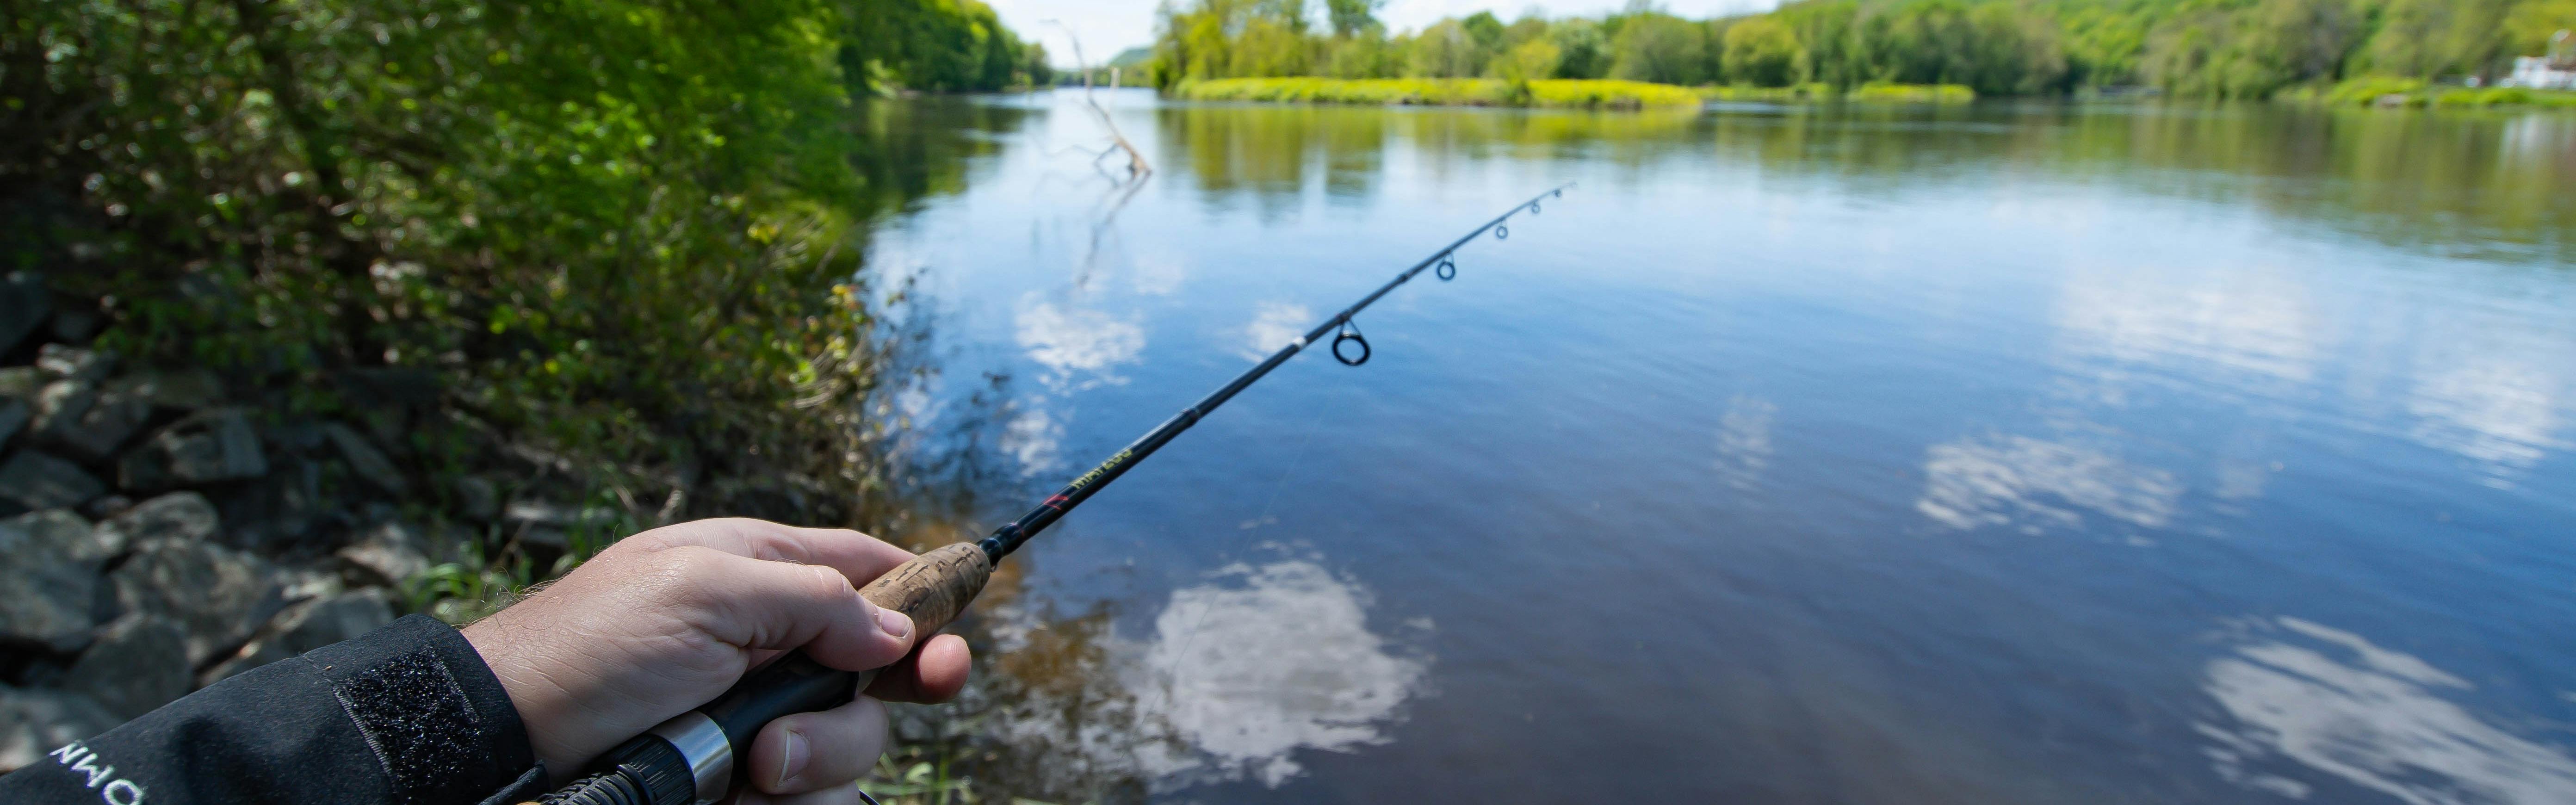 Leisure Sports Fishing Equipment Aluminum Fishing Rod in the Fishing  Equipment department at